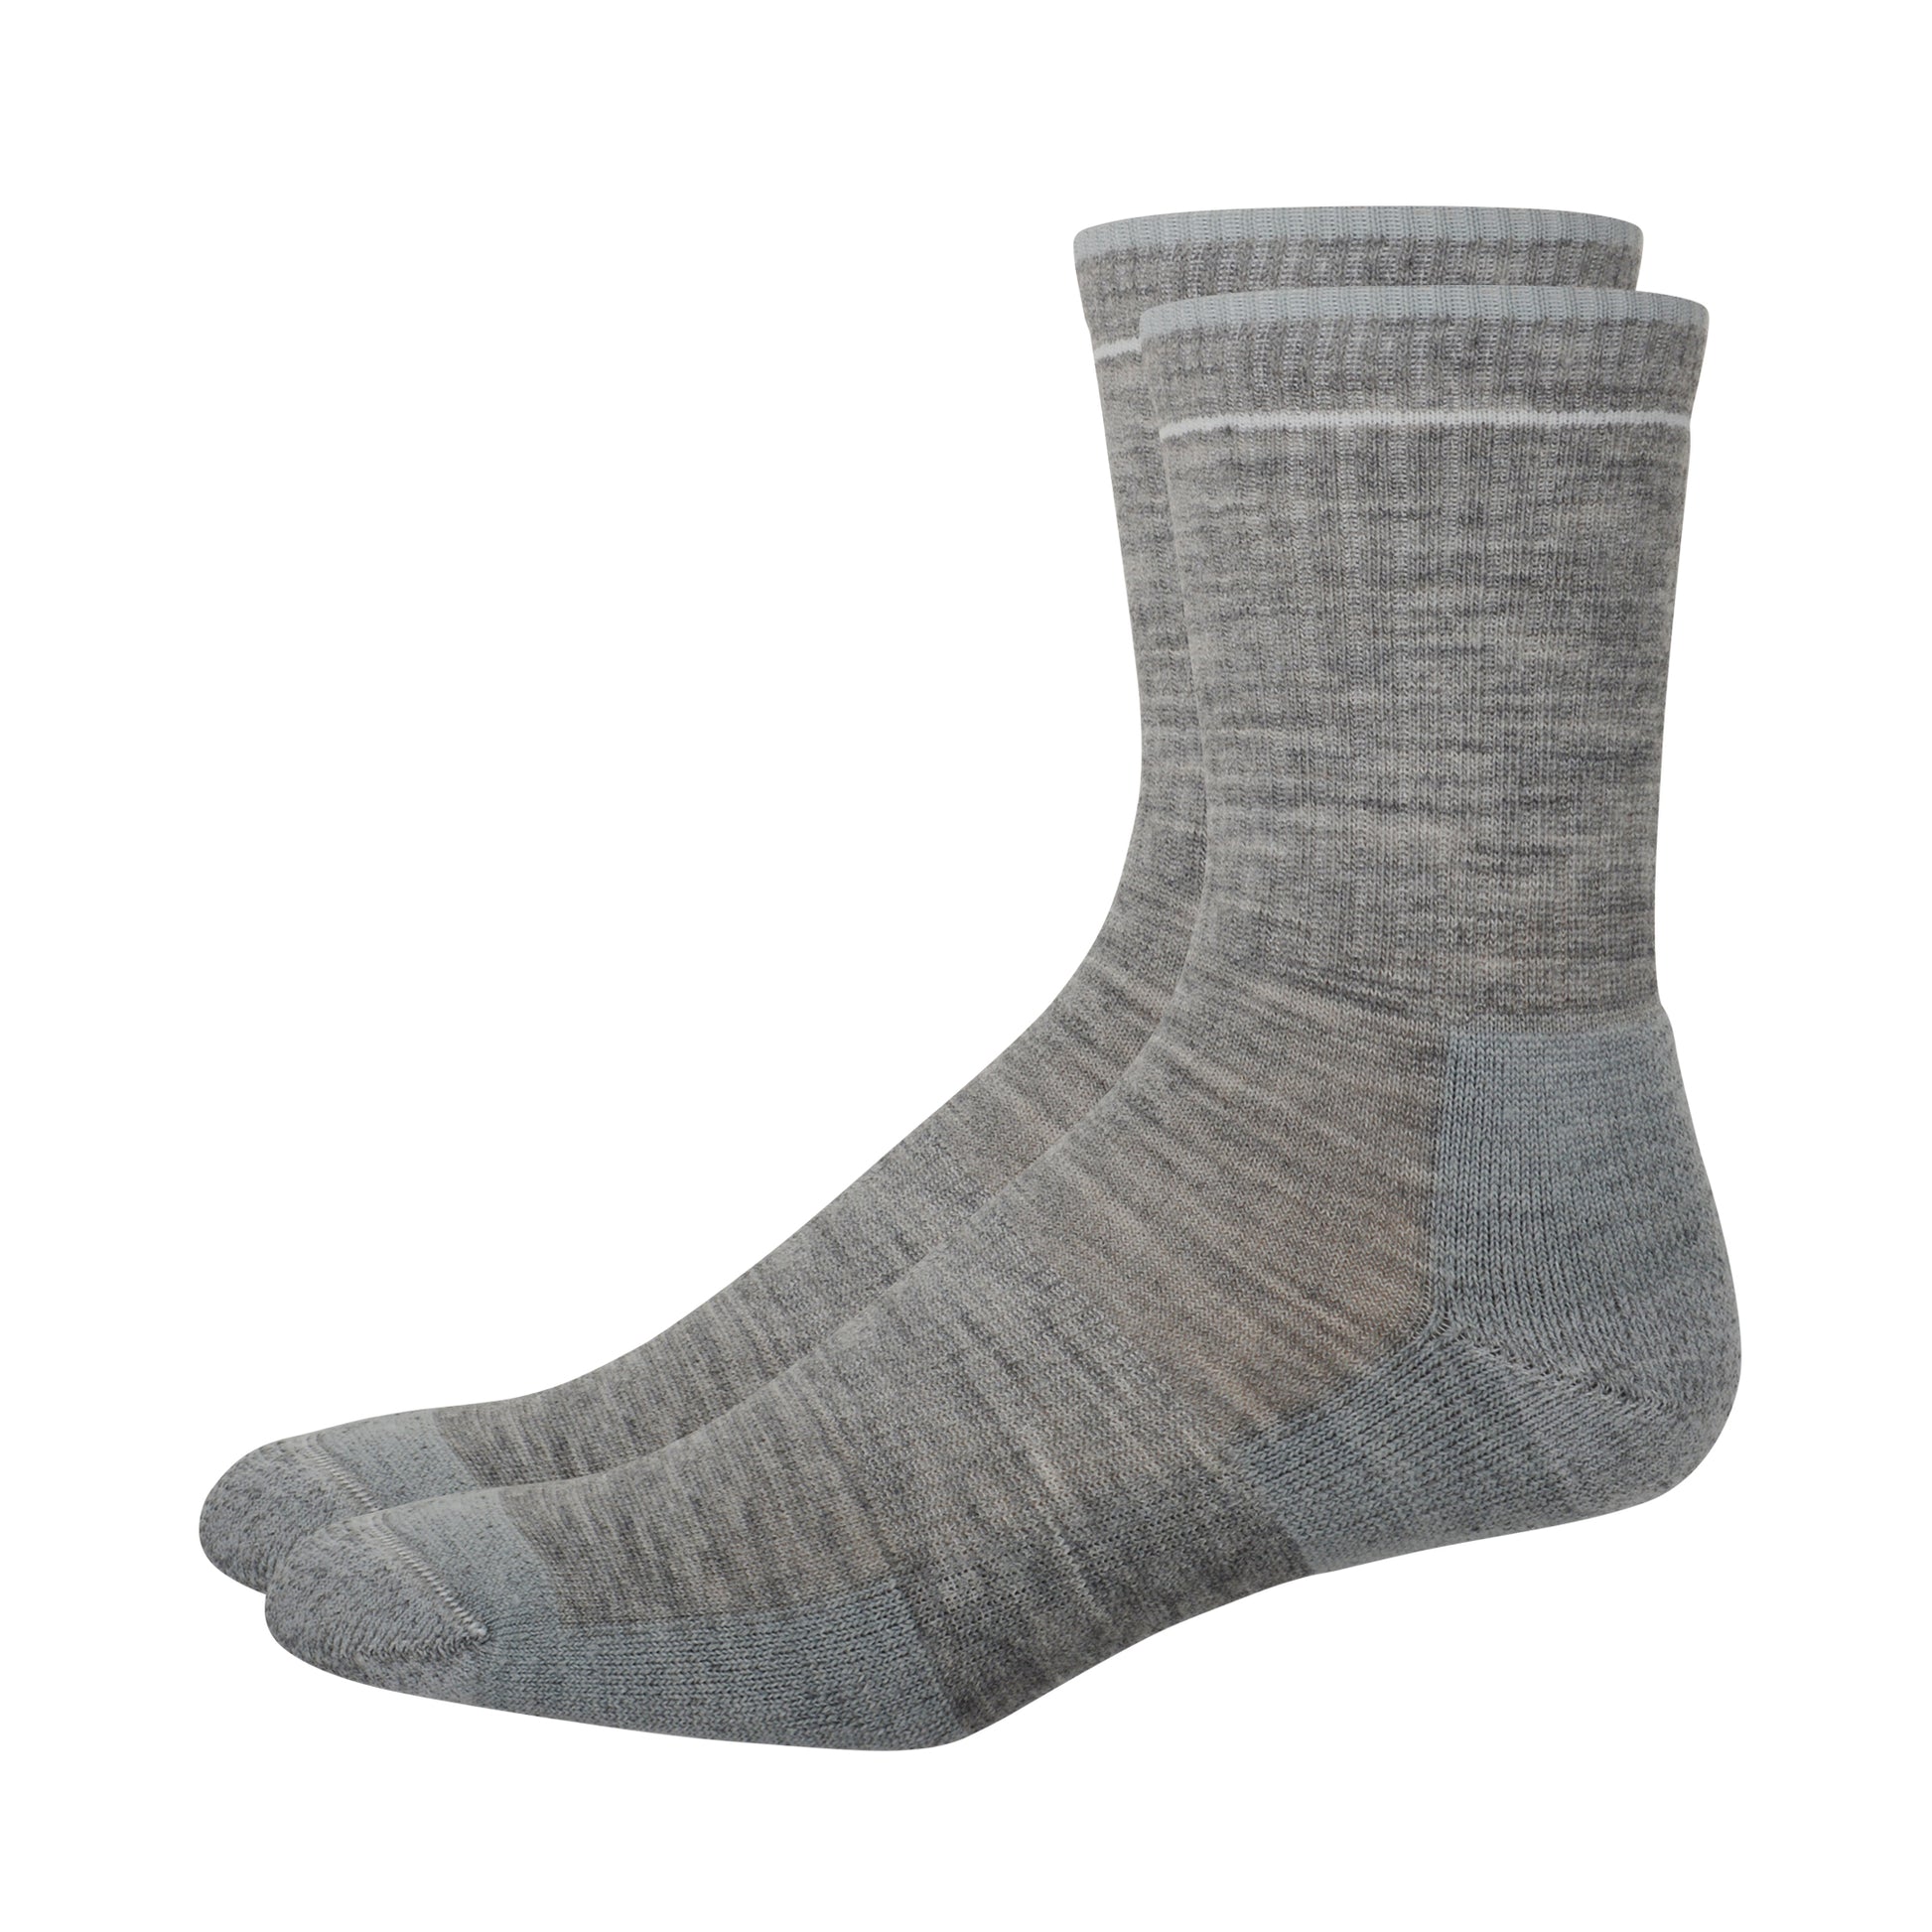 Pair of gray merino wool outdoor socks. 